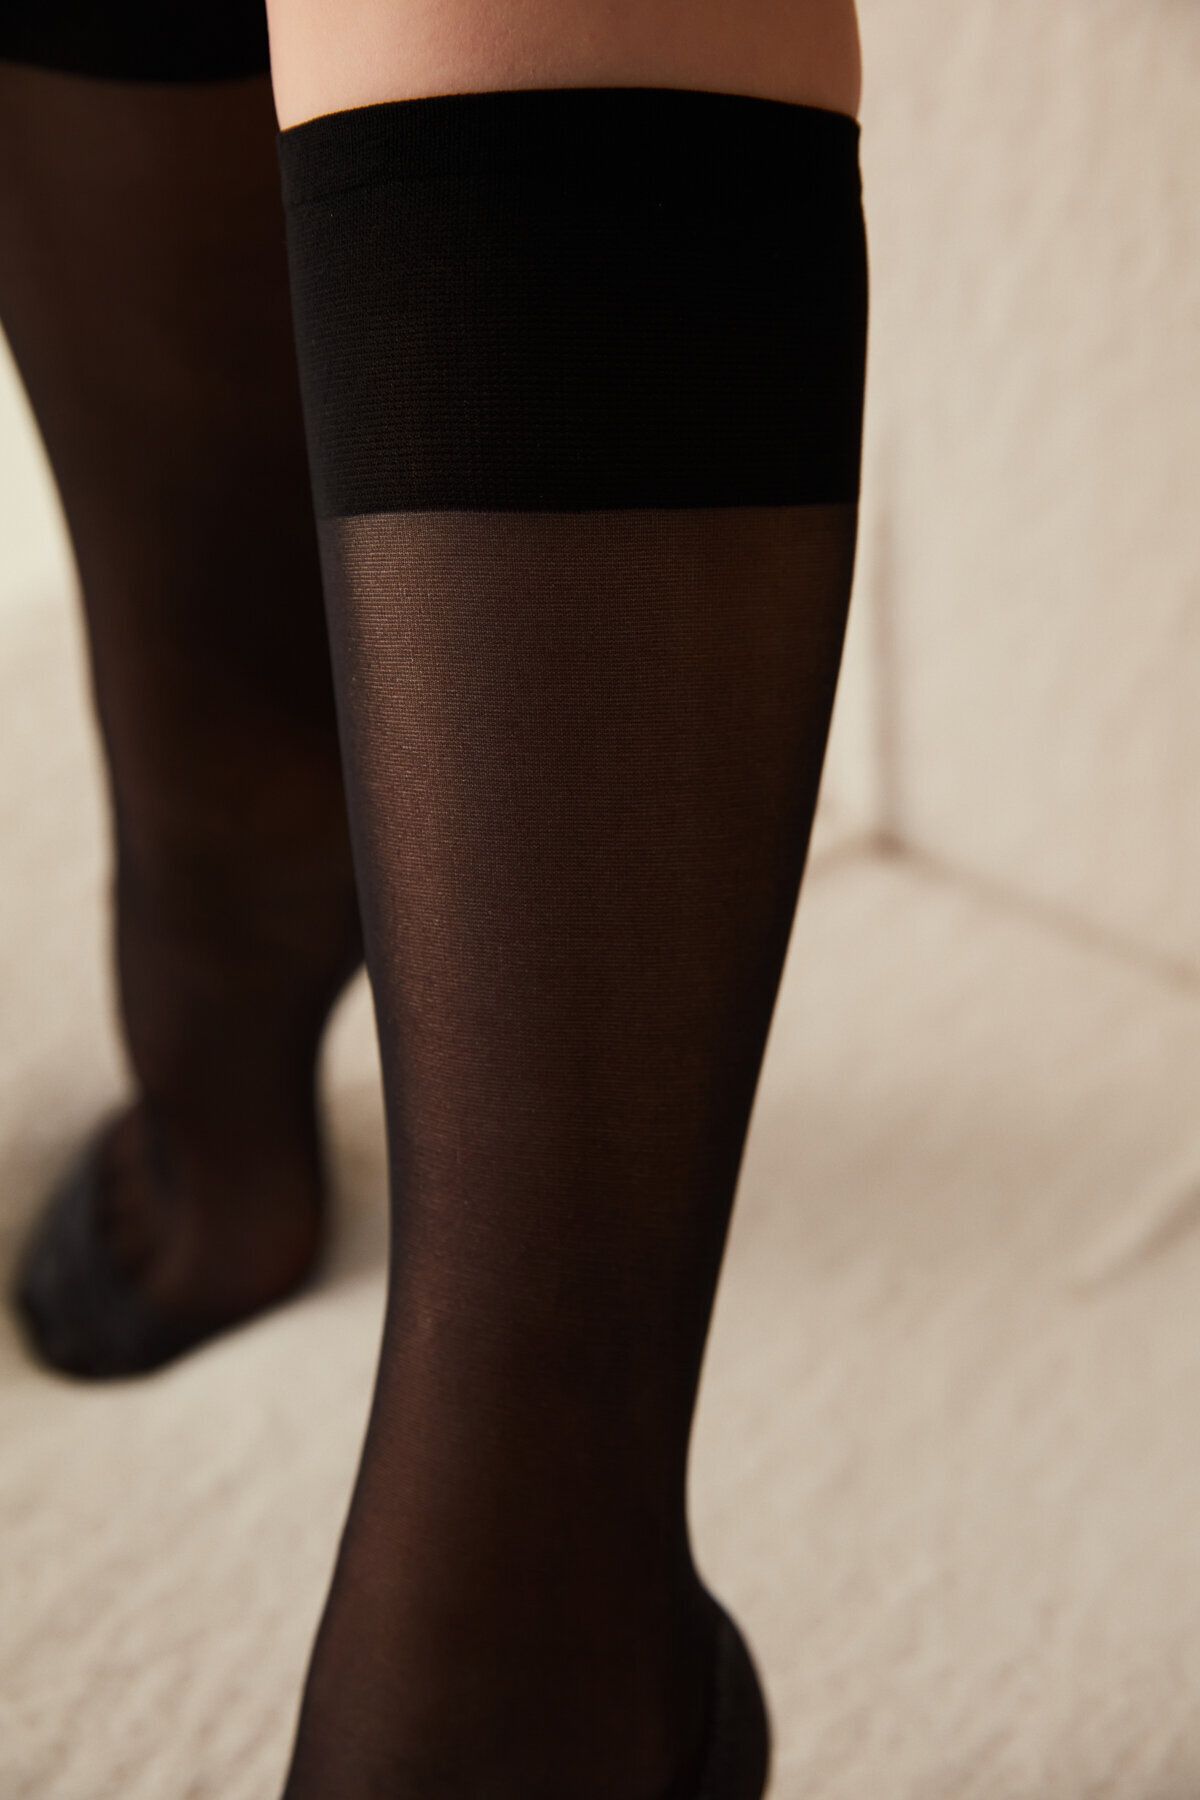 3 Pairs Women's Winterlace Trouser Socks, Black Stretchy Nylon Knee High  Queen | eBay